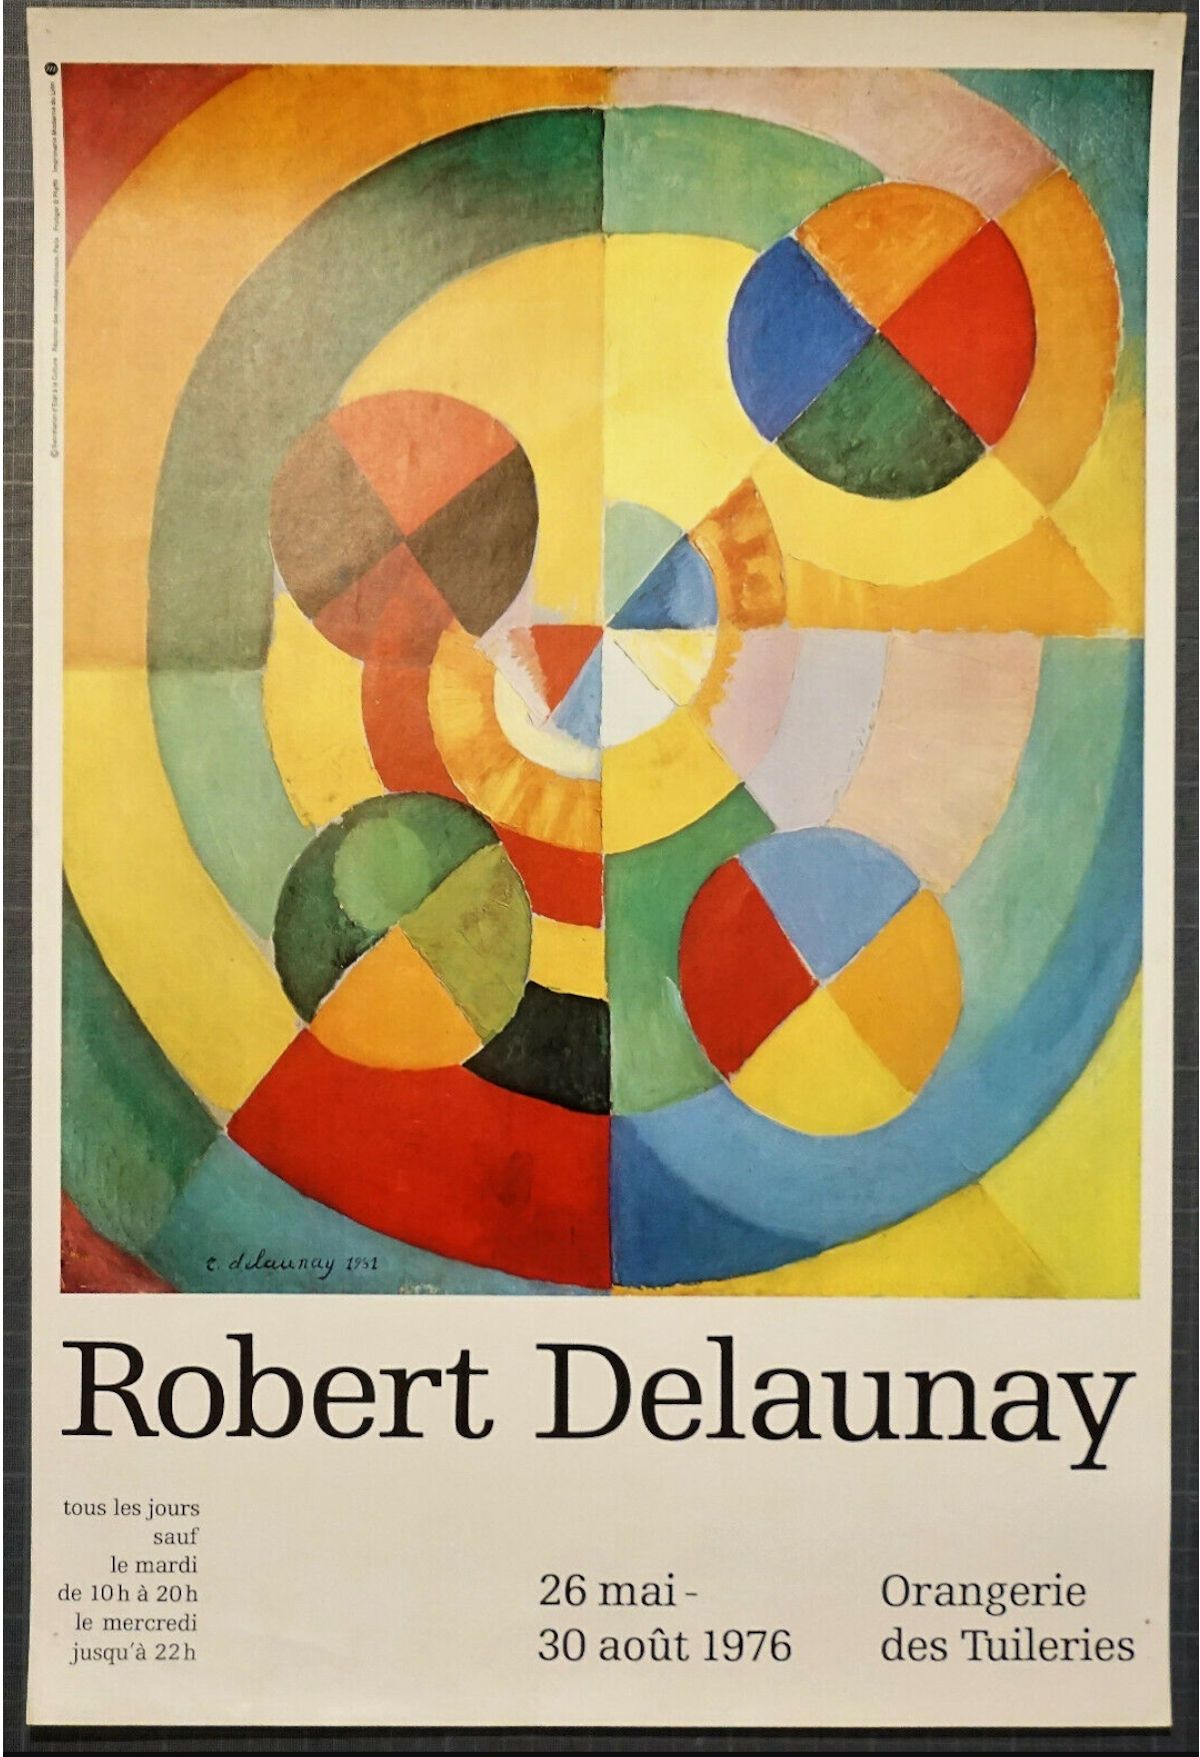 Robert DELAUNAY Robert DELAUNAY

Exposición en la Orangerie, 1976

Cartel origin&hellip;